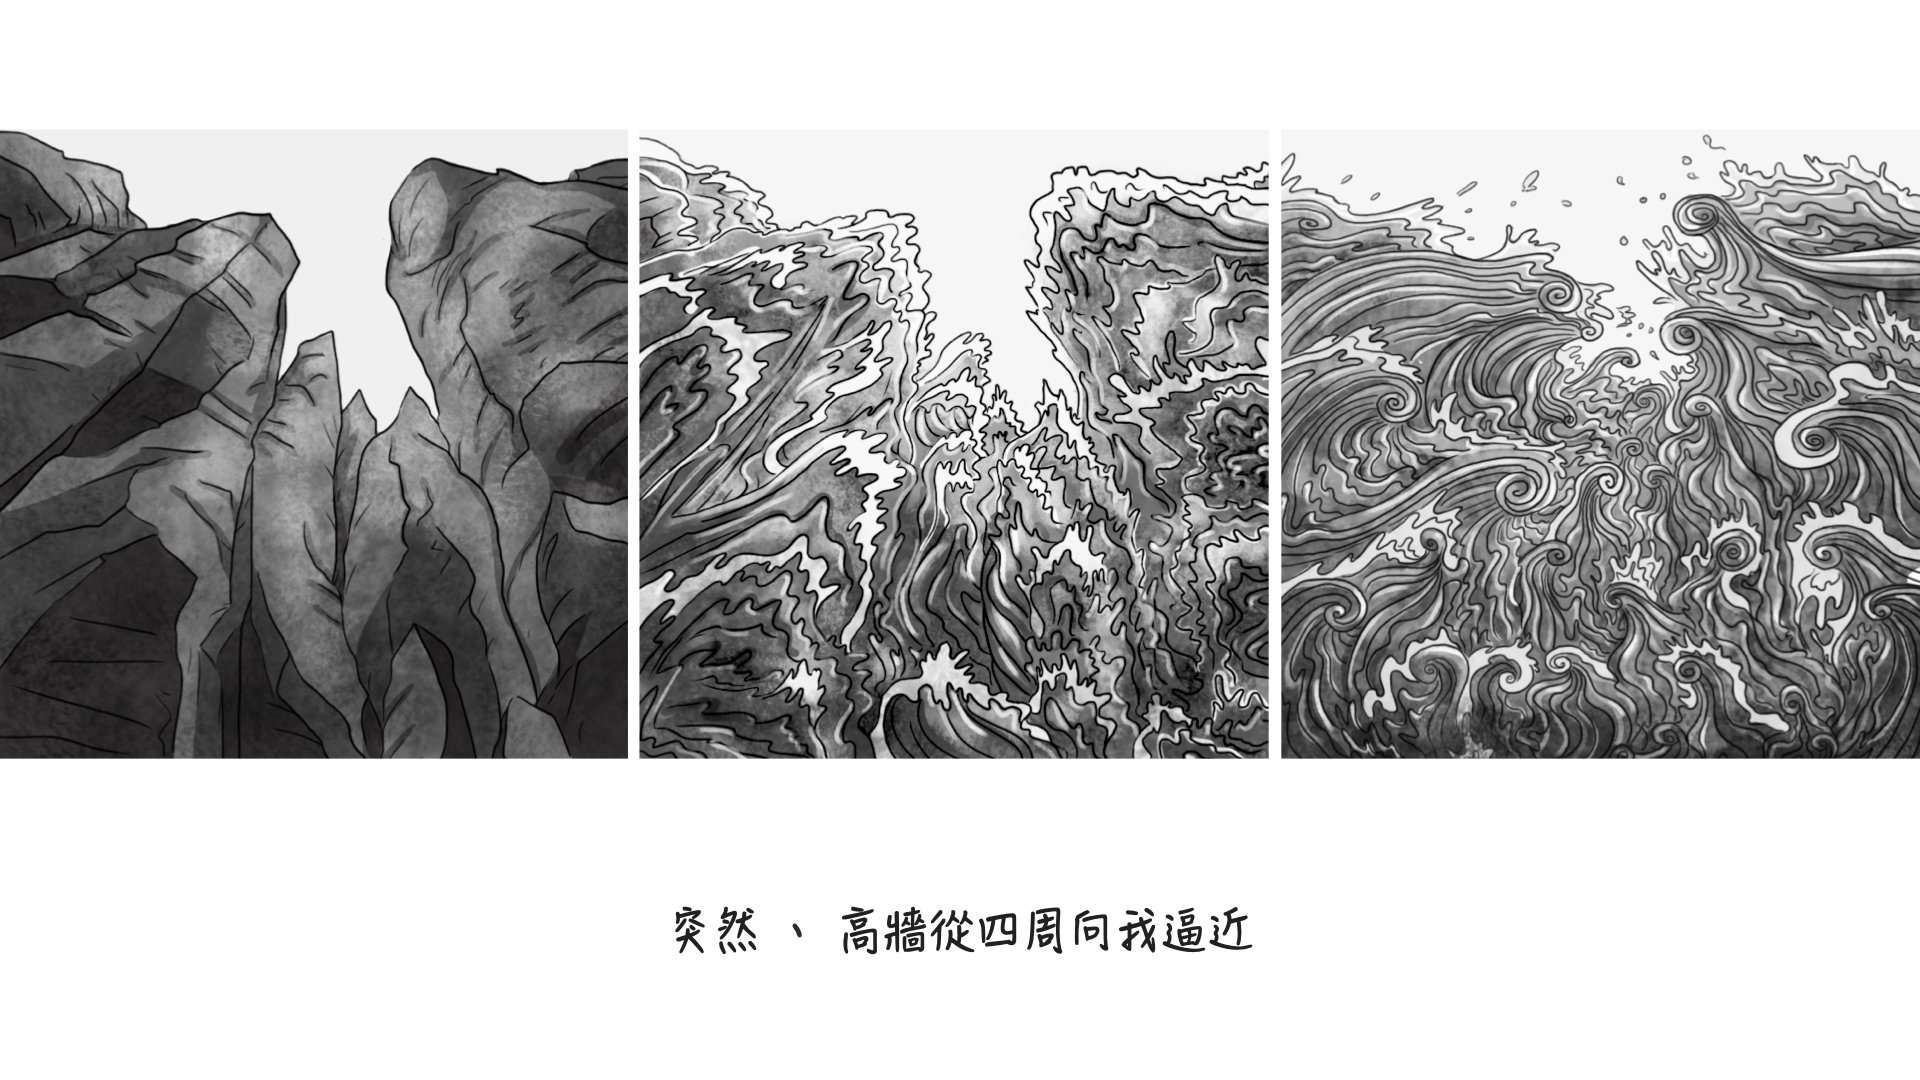 PP_Comic_Chinese_TW.035.jpeg